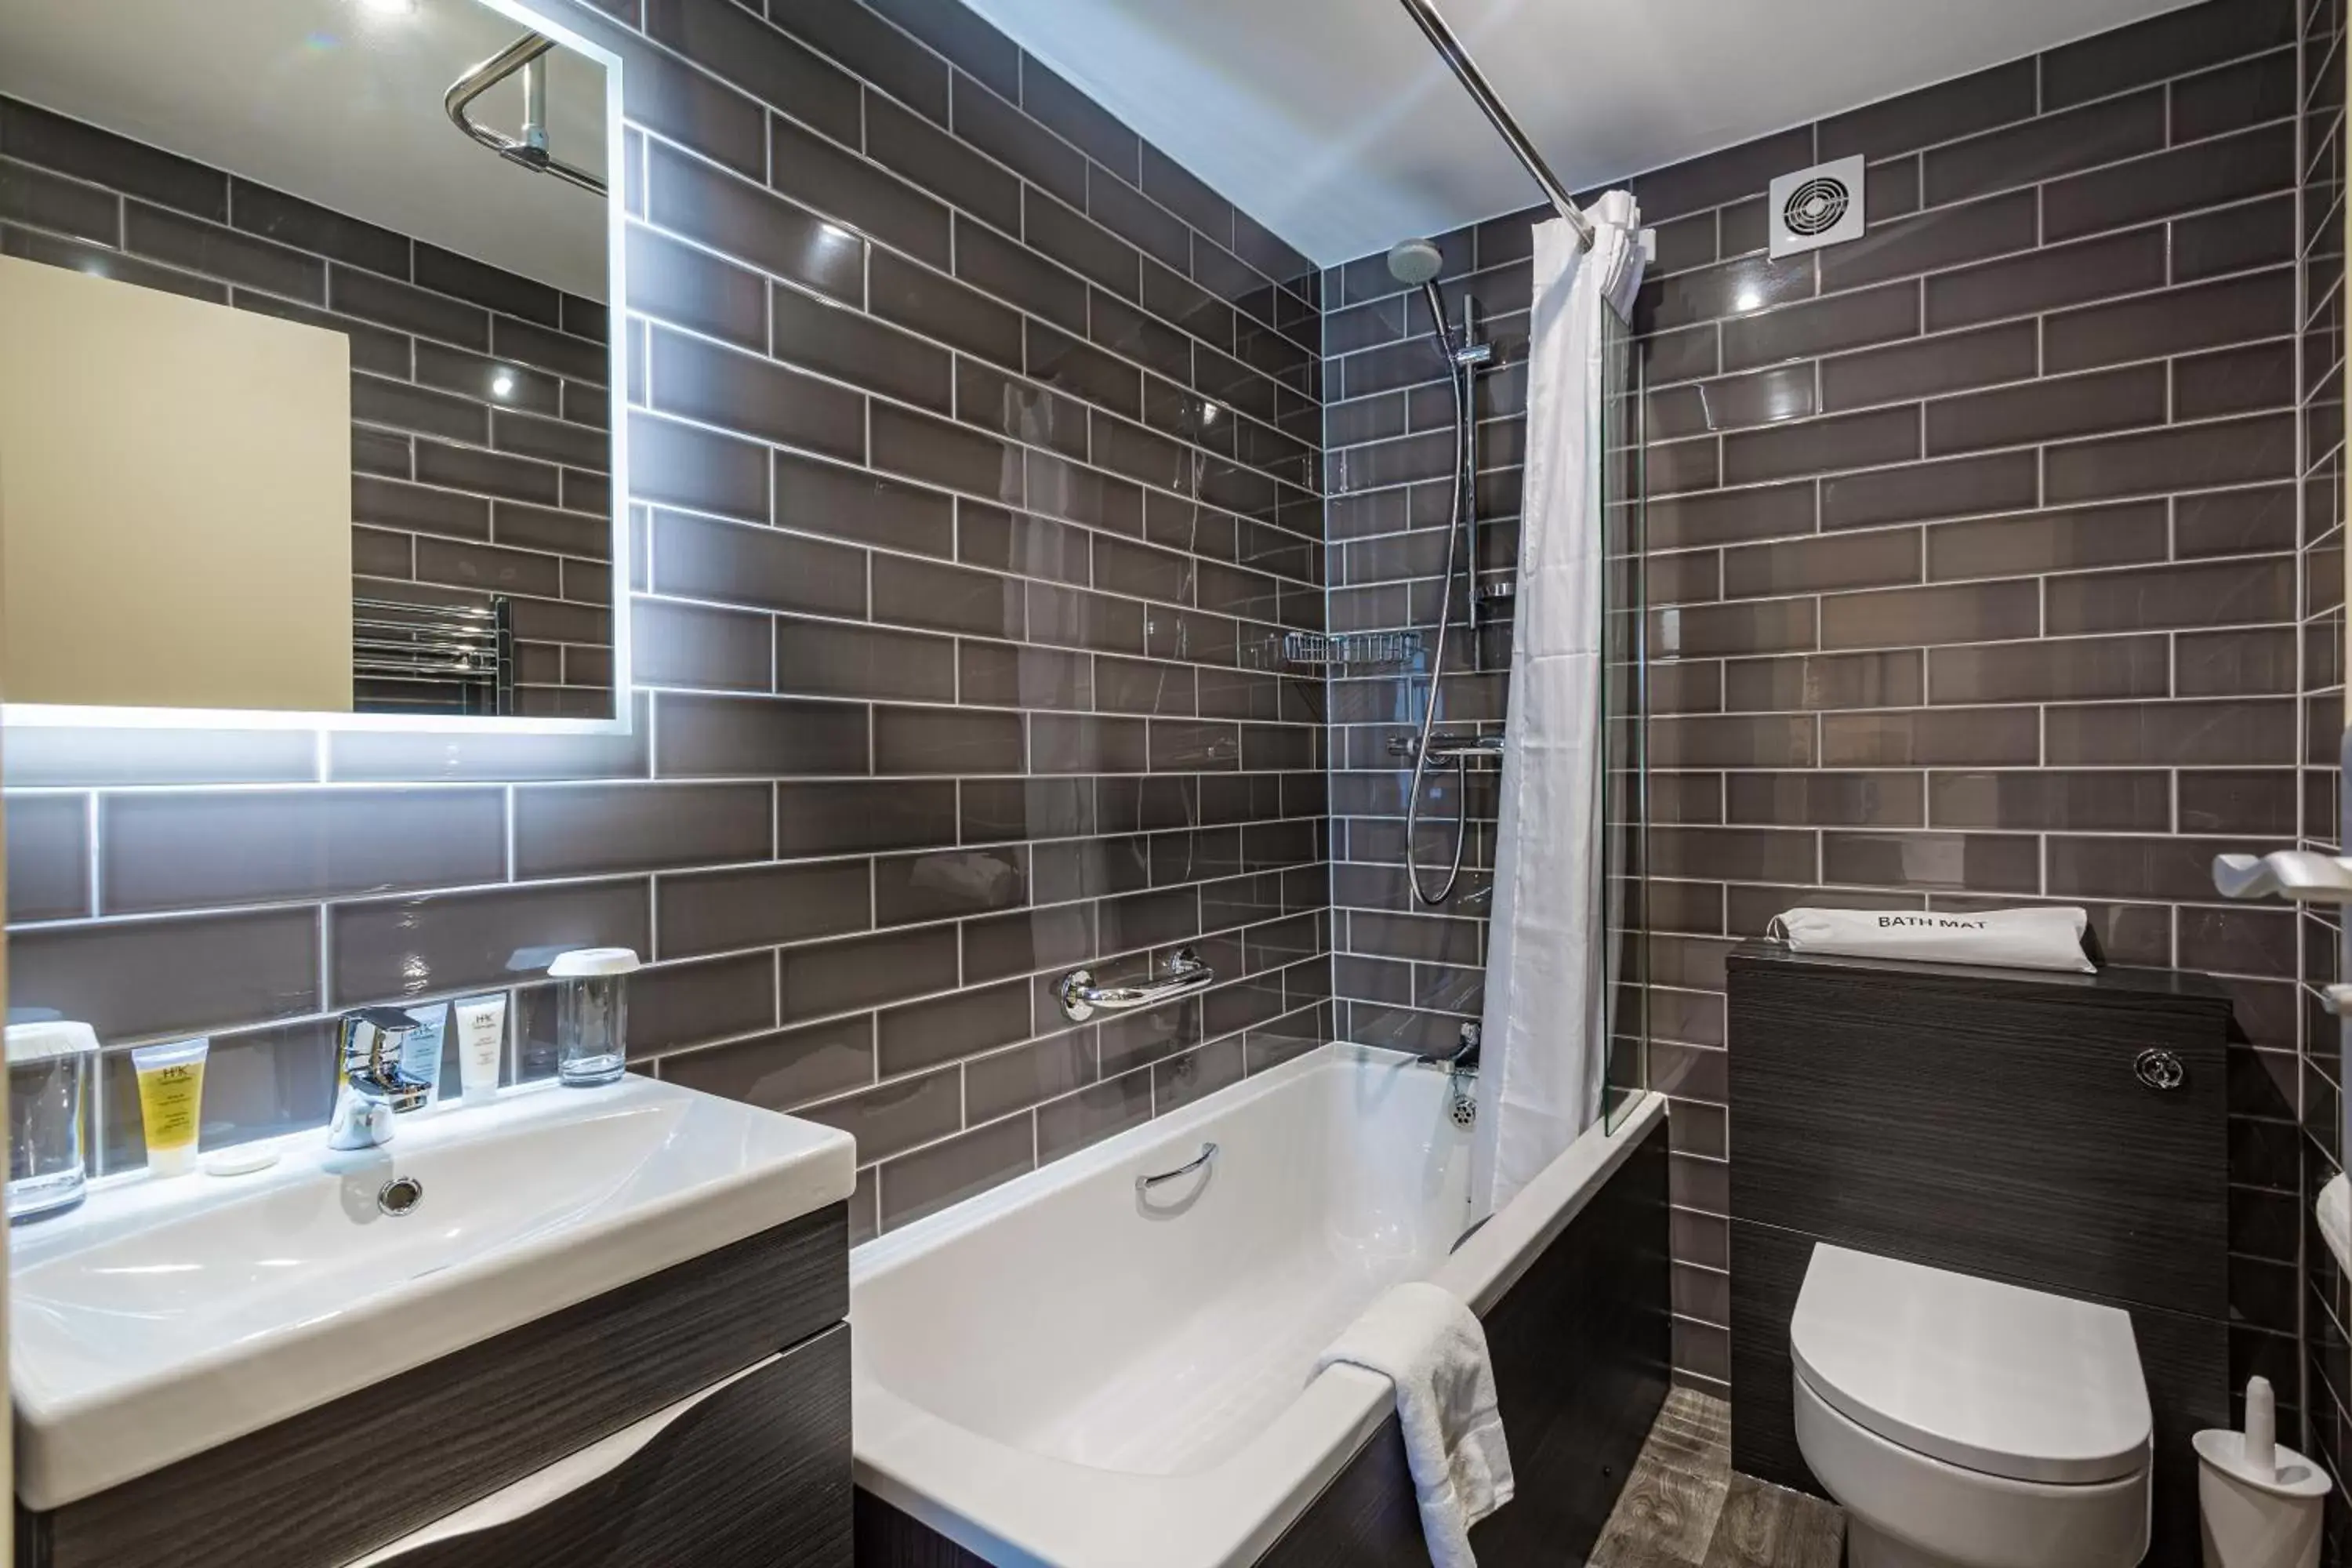 Bathroom in The Rutland Arms Hotel, Bakewell, Derbyshire